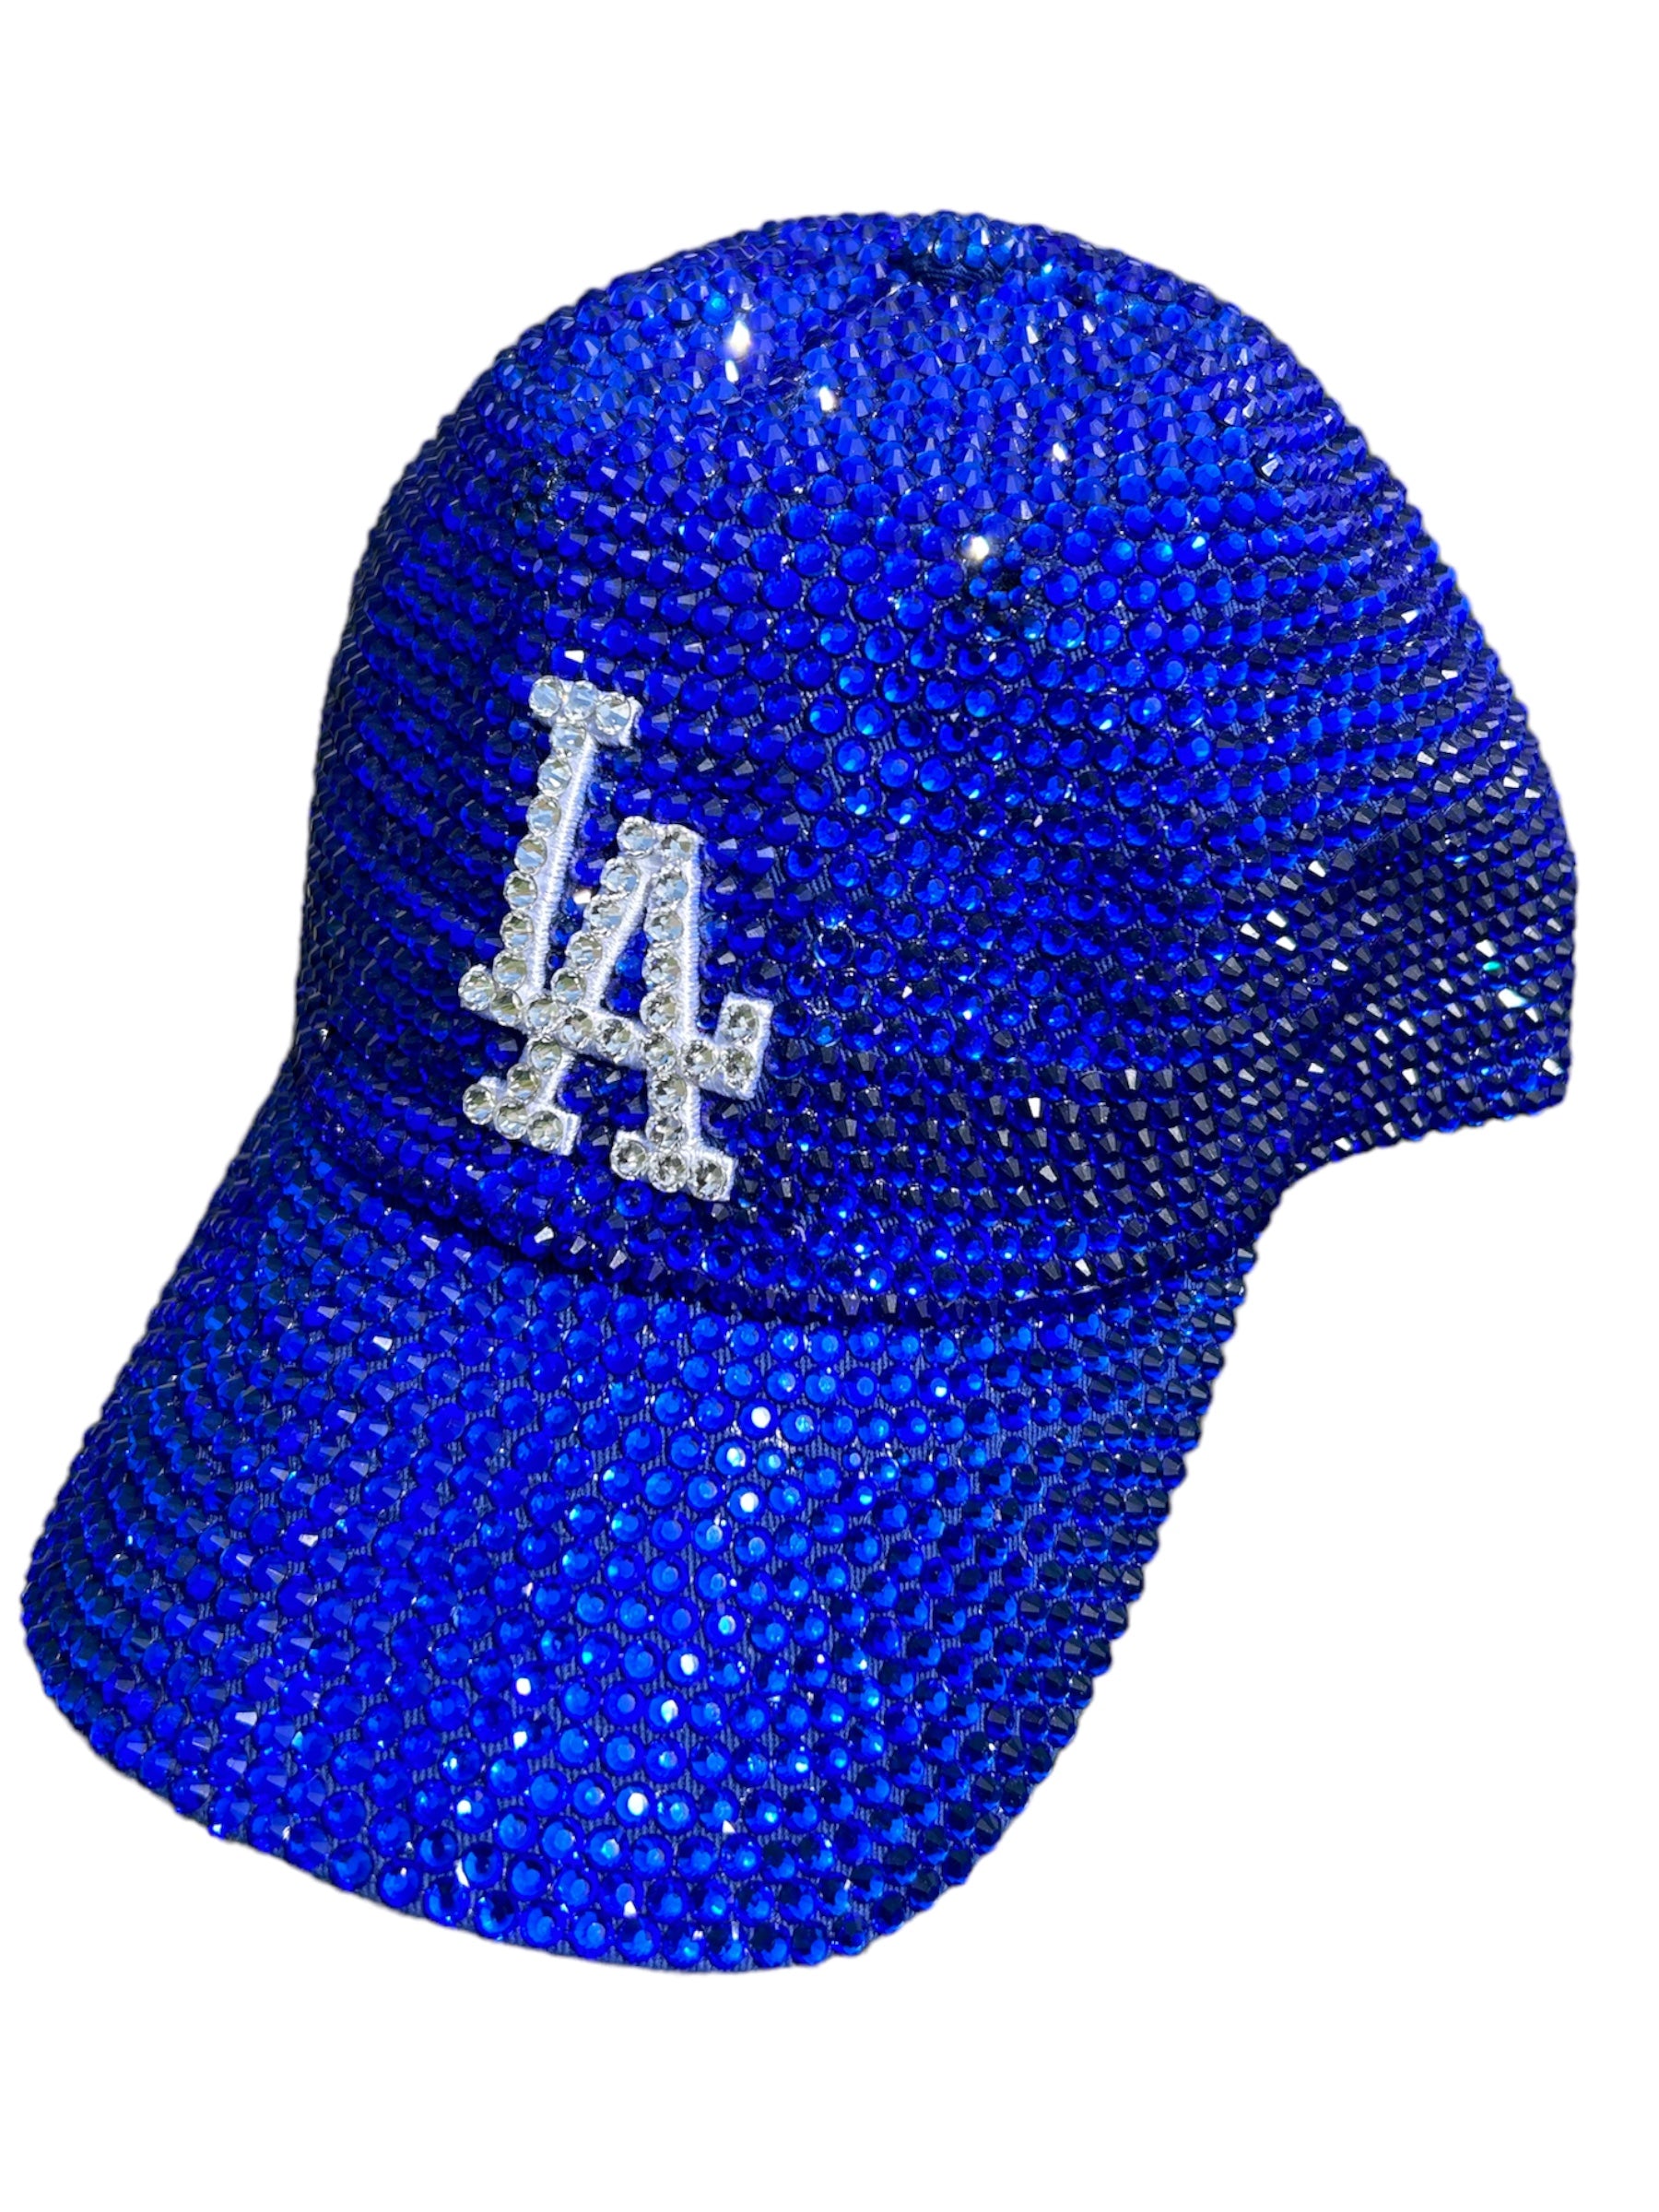 Fully Bedazzled LA Dodgers Baseball Hat